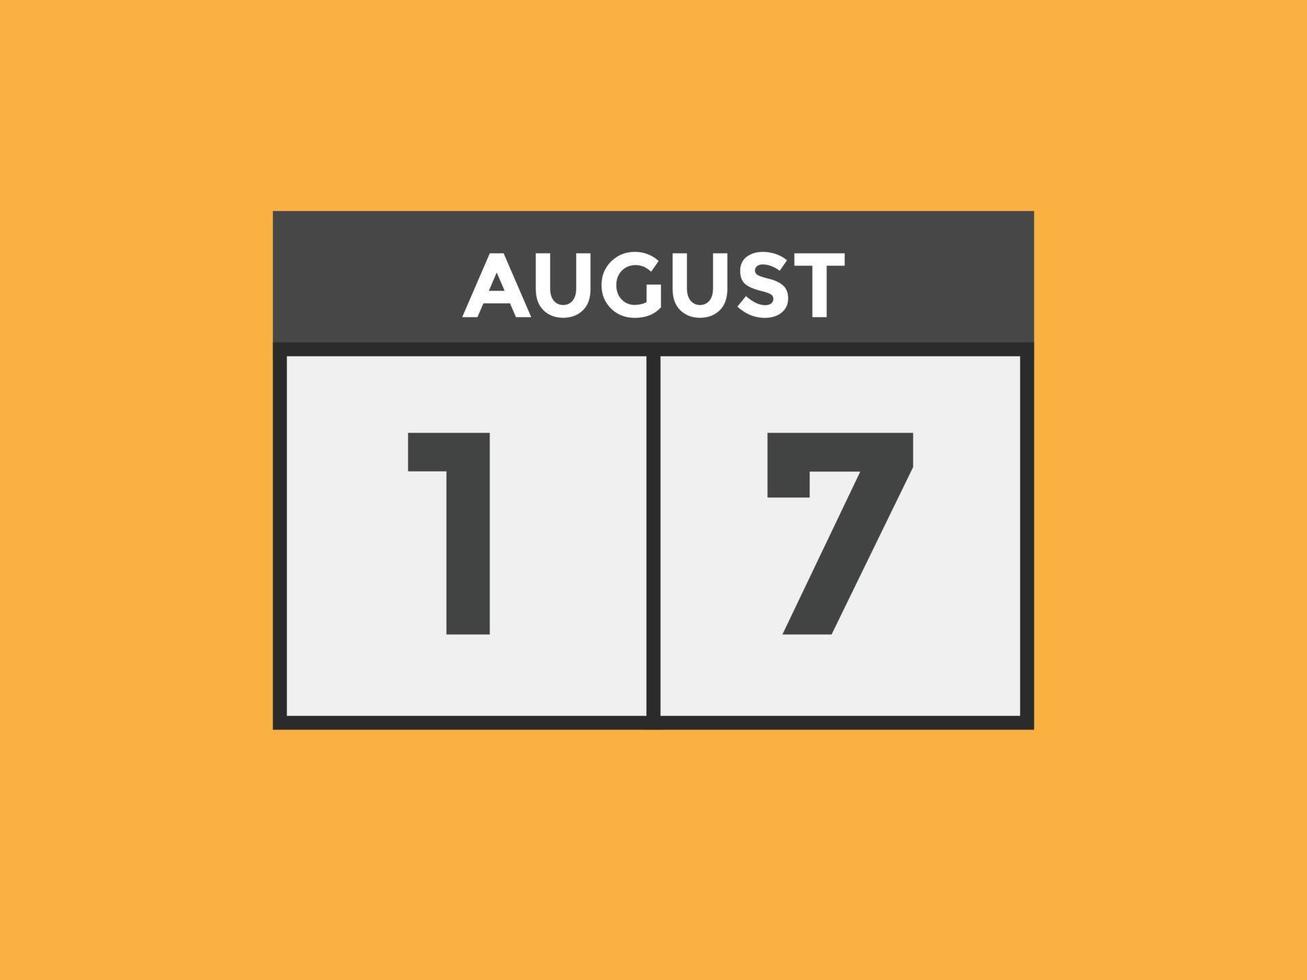 augusti 7 kalender påminnelse. 7:e augusti dagligen kalender ikon mall. kalender 7:e augusti ikon design mall. vektor illustration